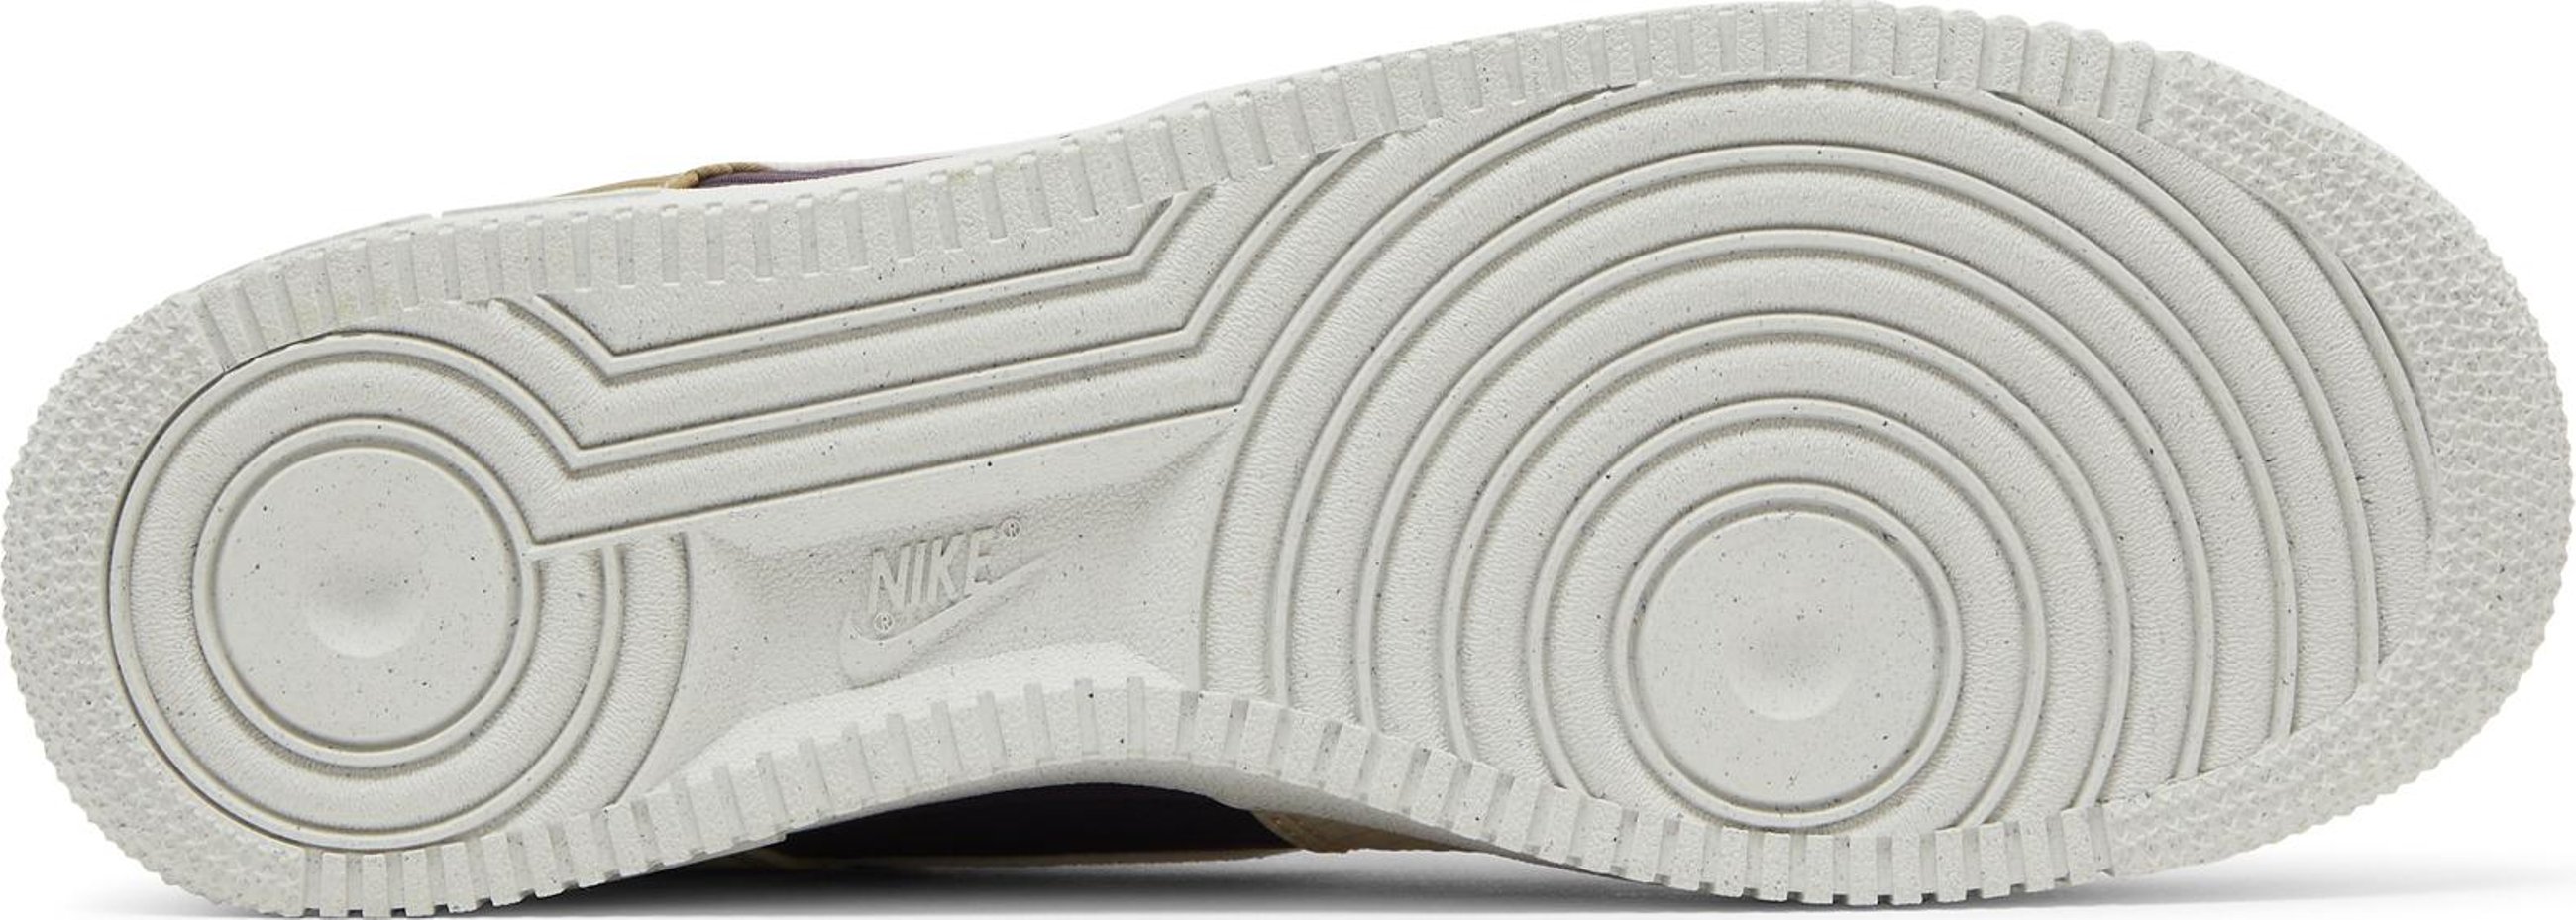 Nike Mens Air Force 1'07 Lx Basketball Shoe (11) - image 4 of 5